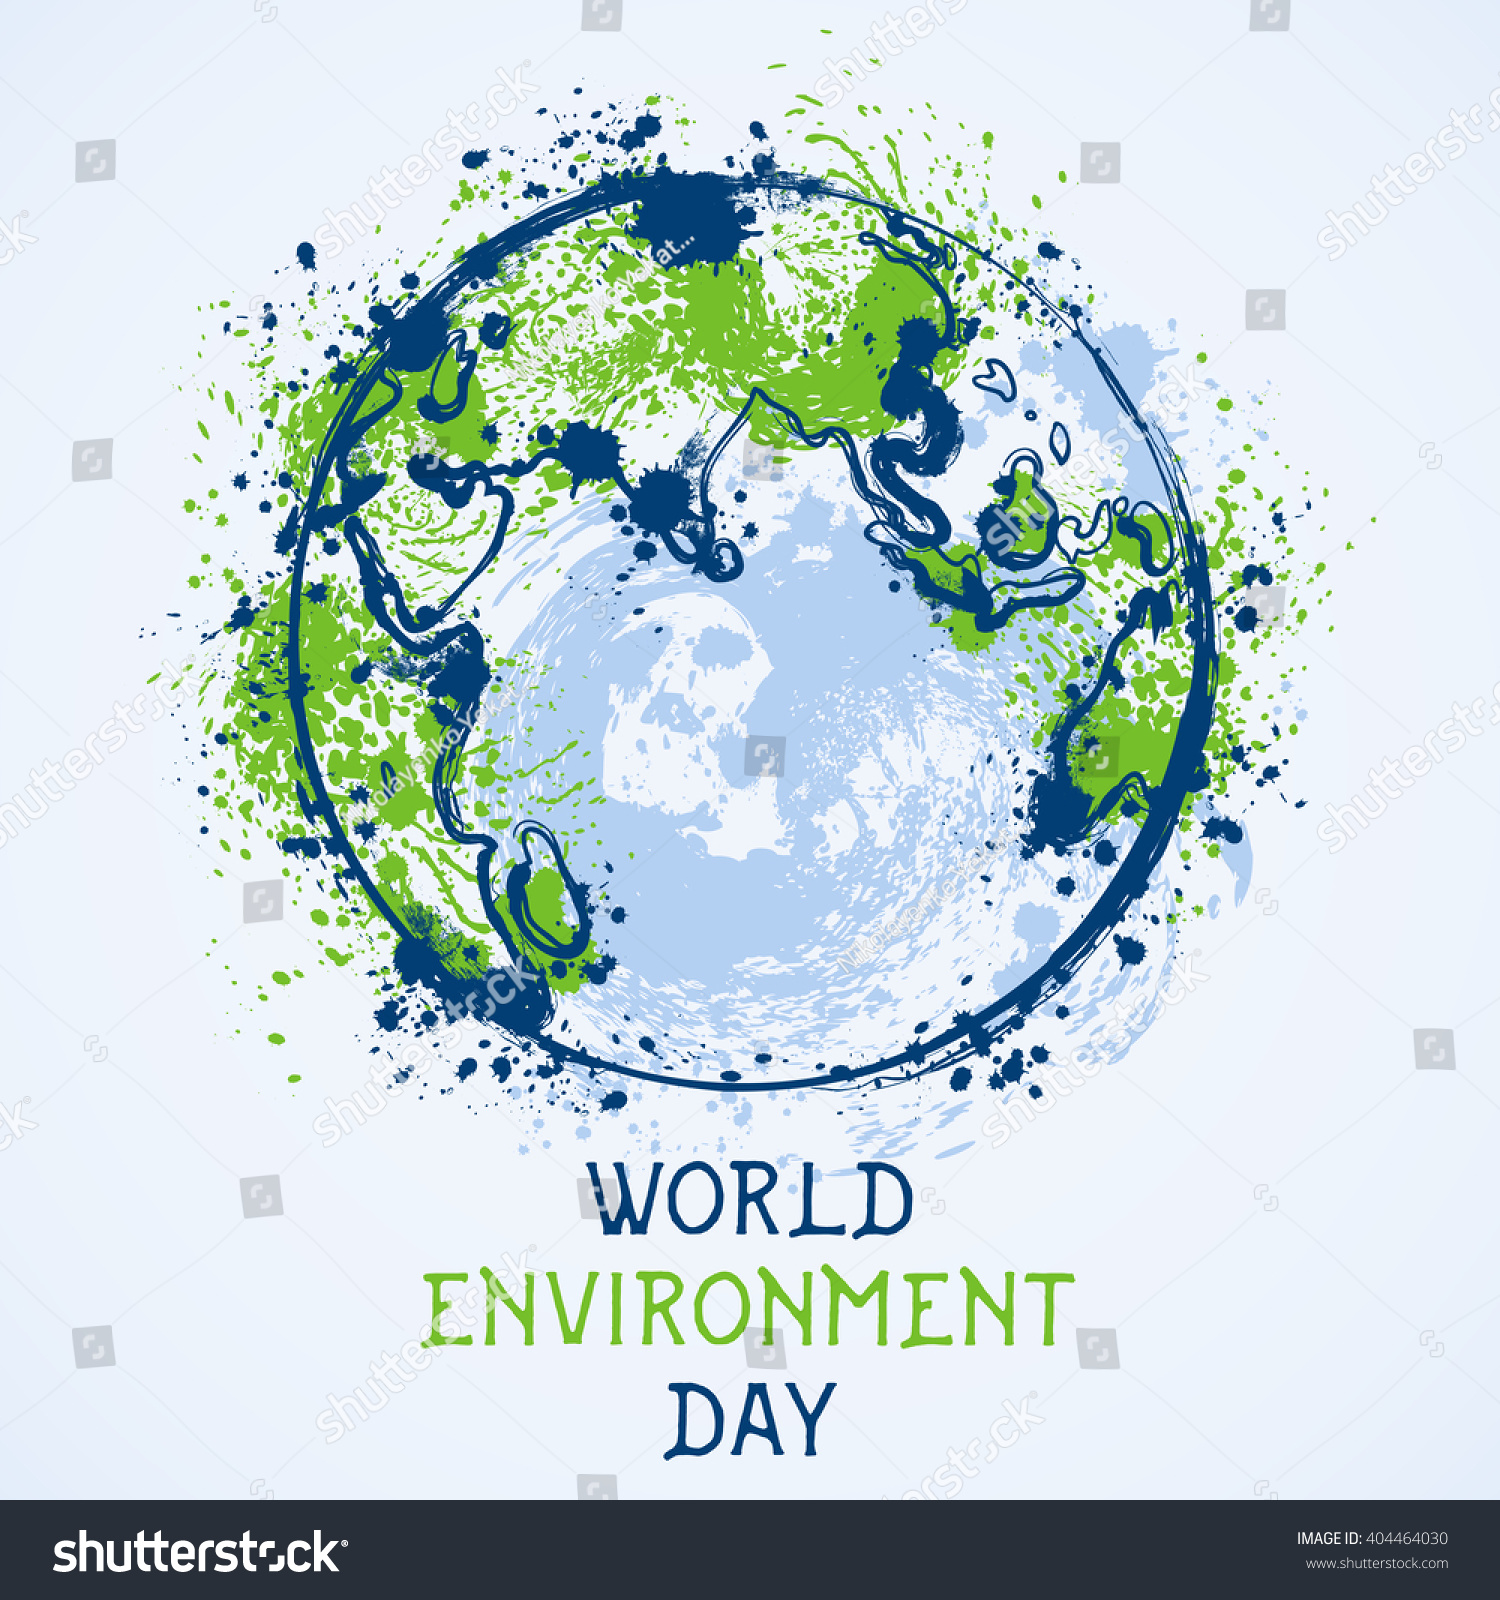 World Environment Day Earth Globe Splashes Stock Vector 404464030 ...